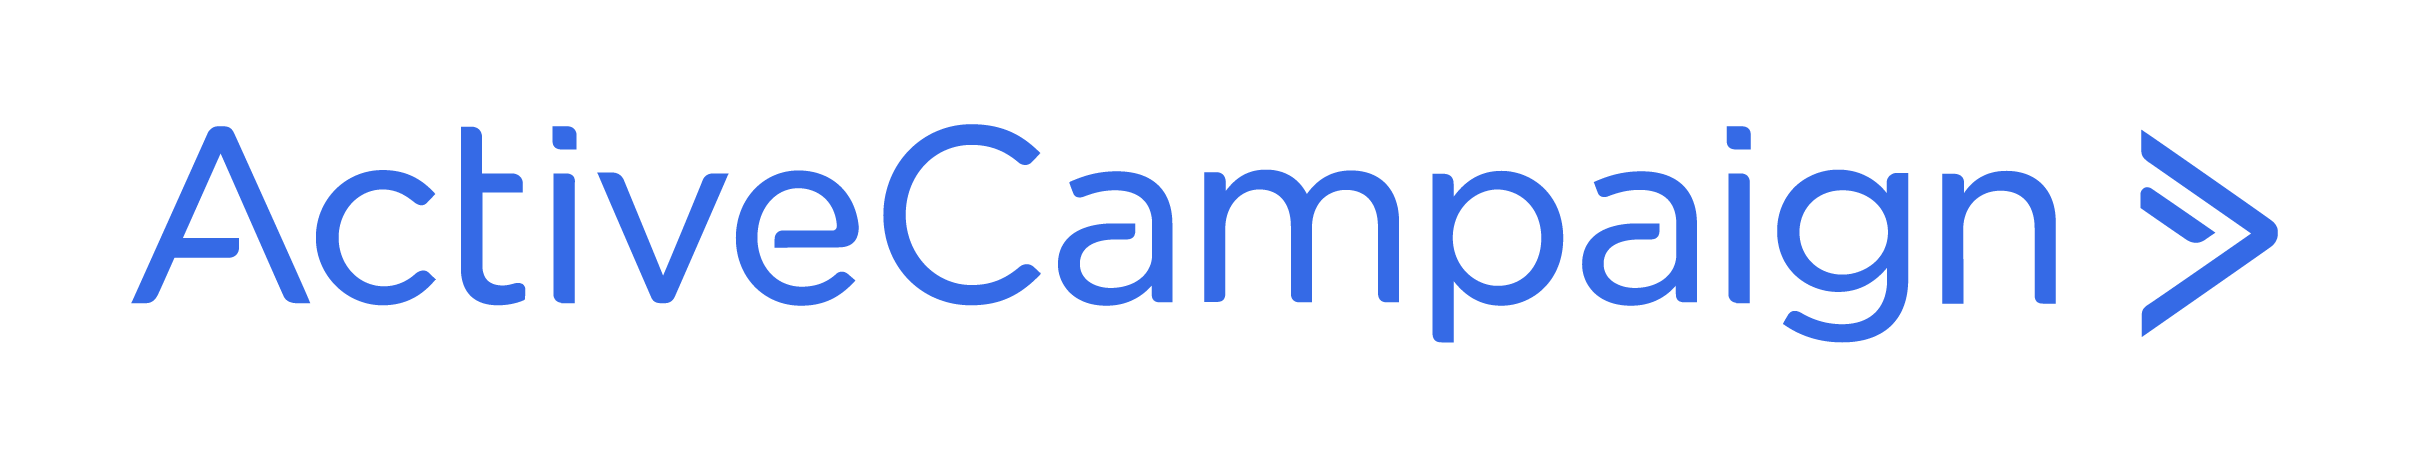 ActiveCampaign logo blue